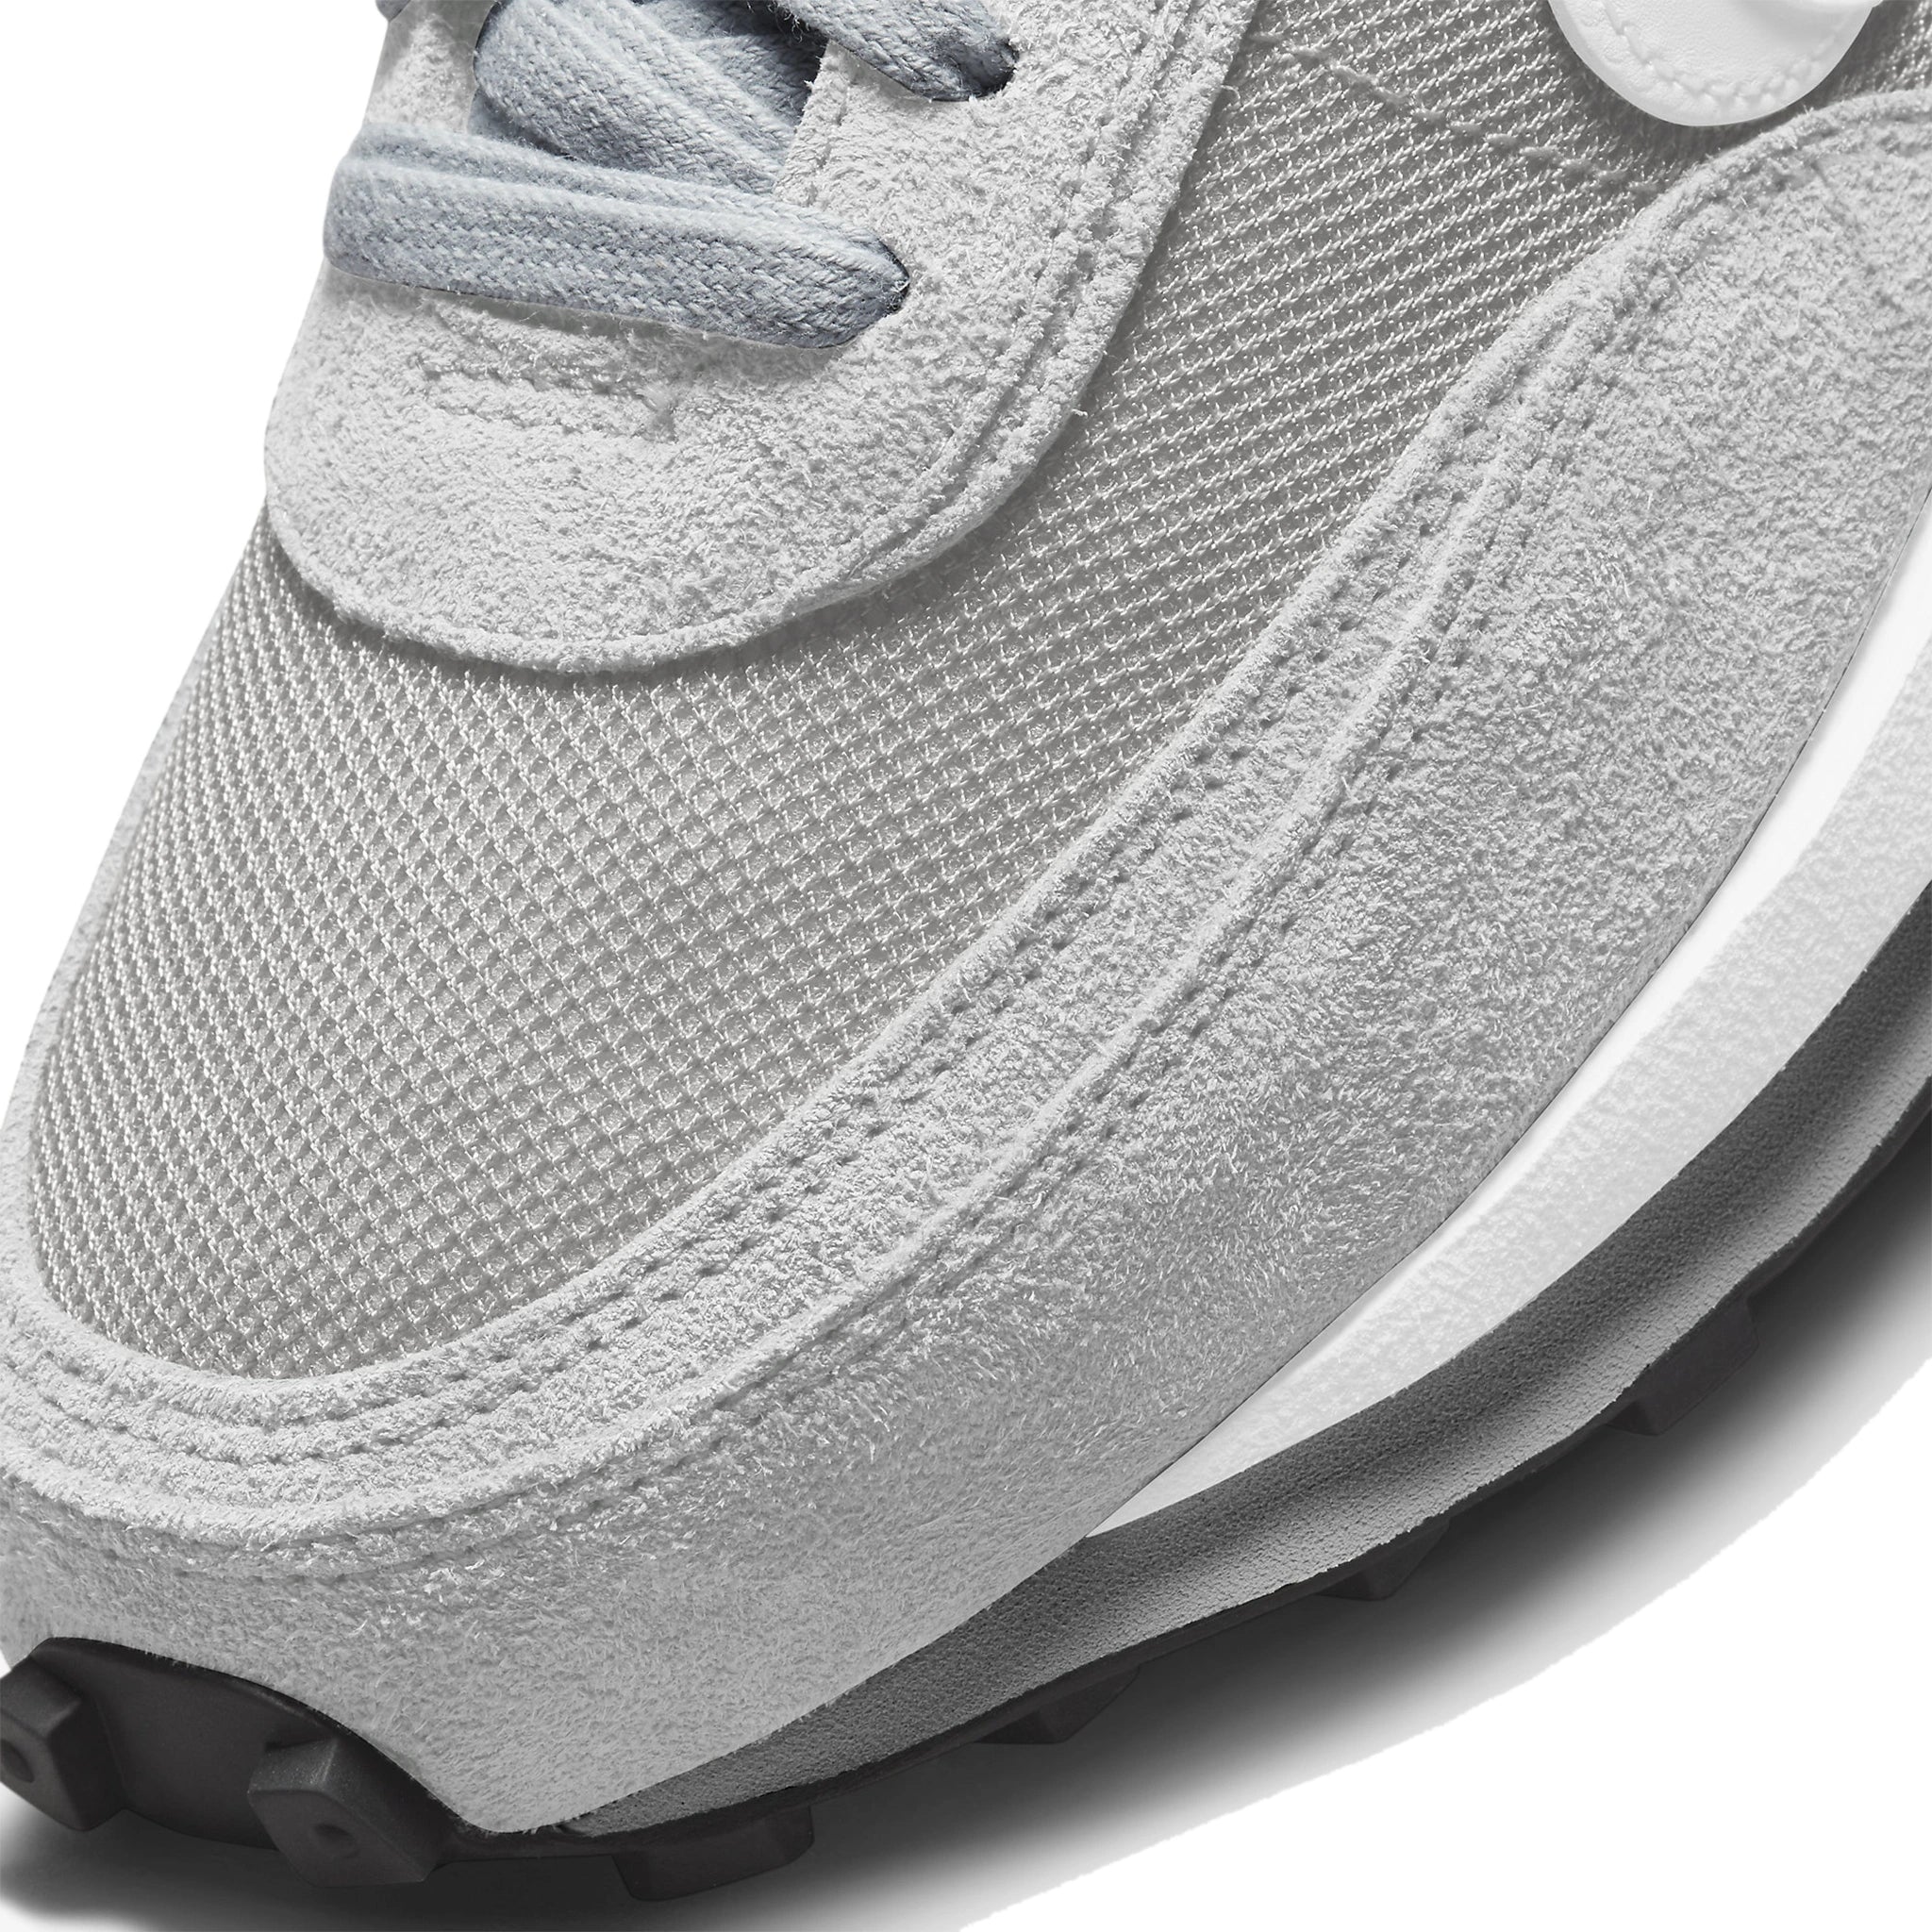 Detail view of Nike x Sacai LD Waffle SF Fragment Grey DH2684-001